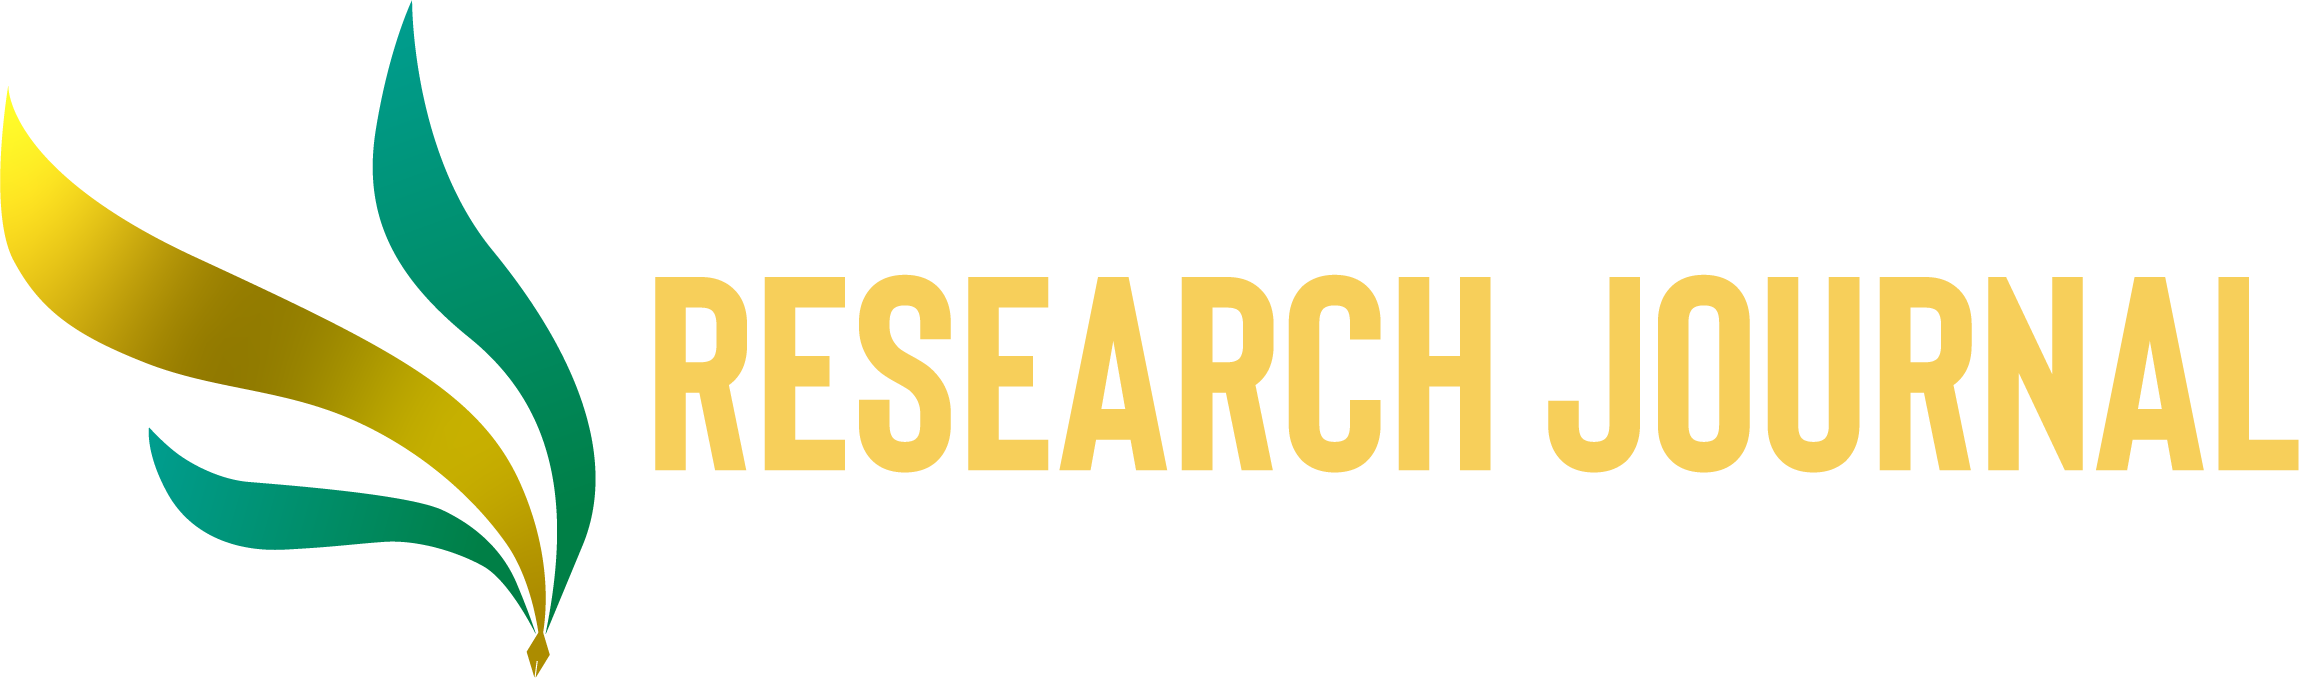 Romblon State University Research Journal